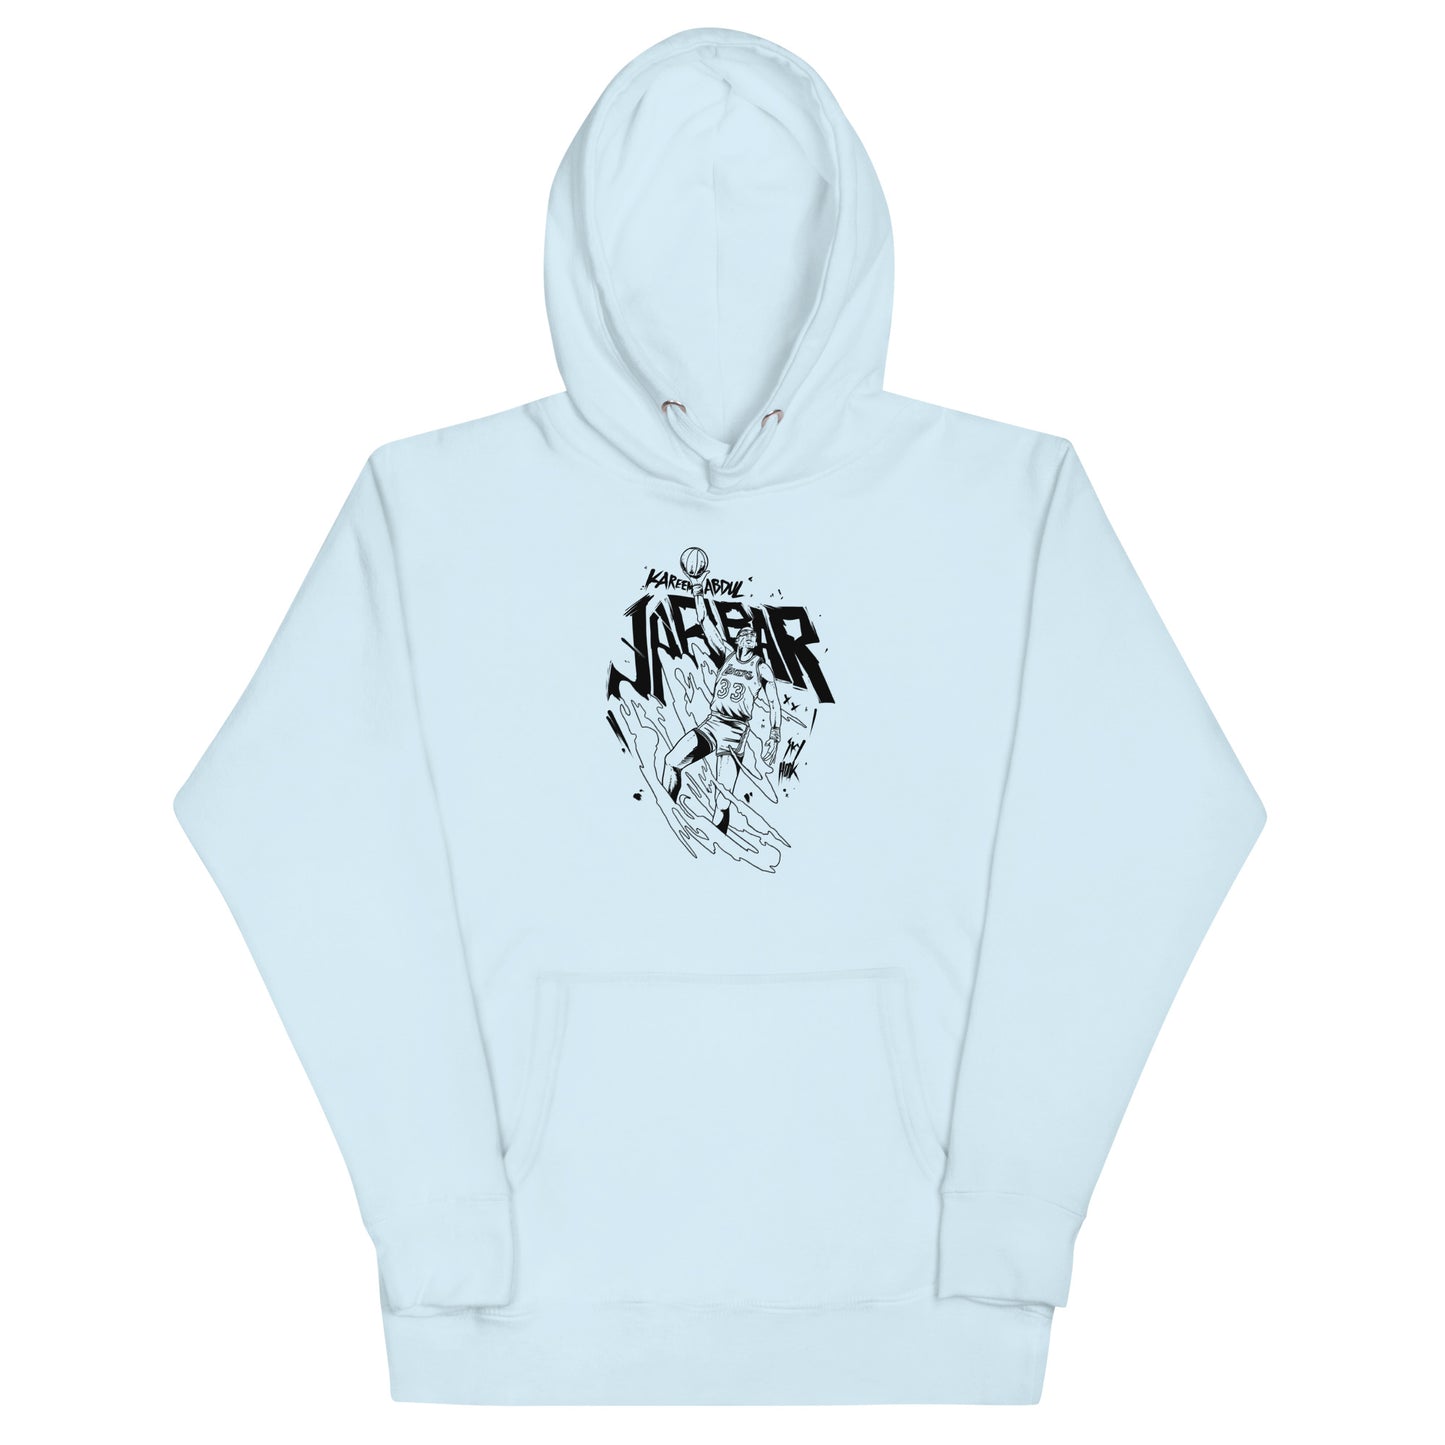 Kareem Abdul-Jabbar - "Sky Hook" hoodie